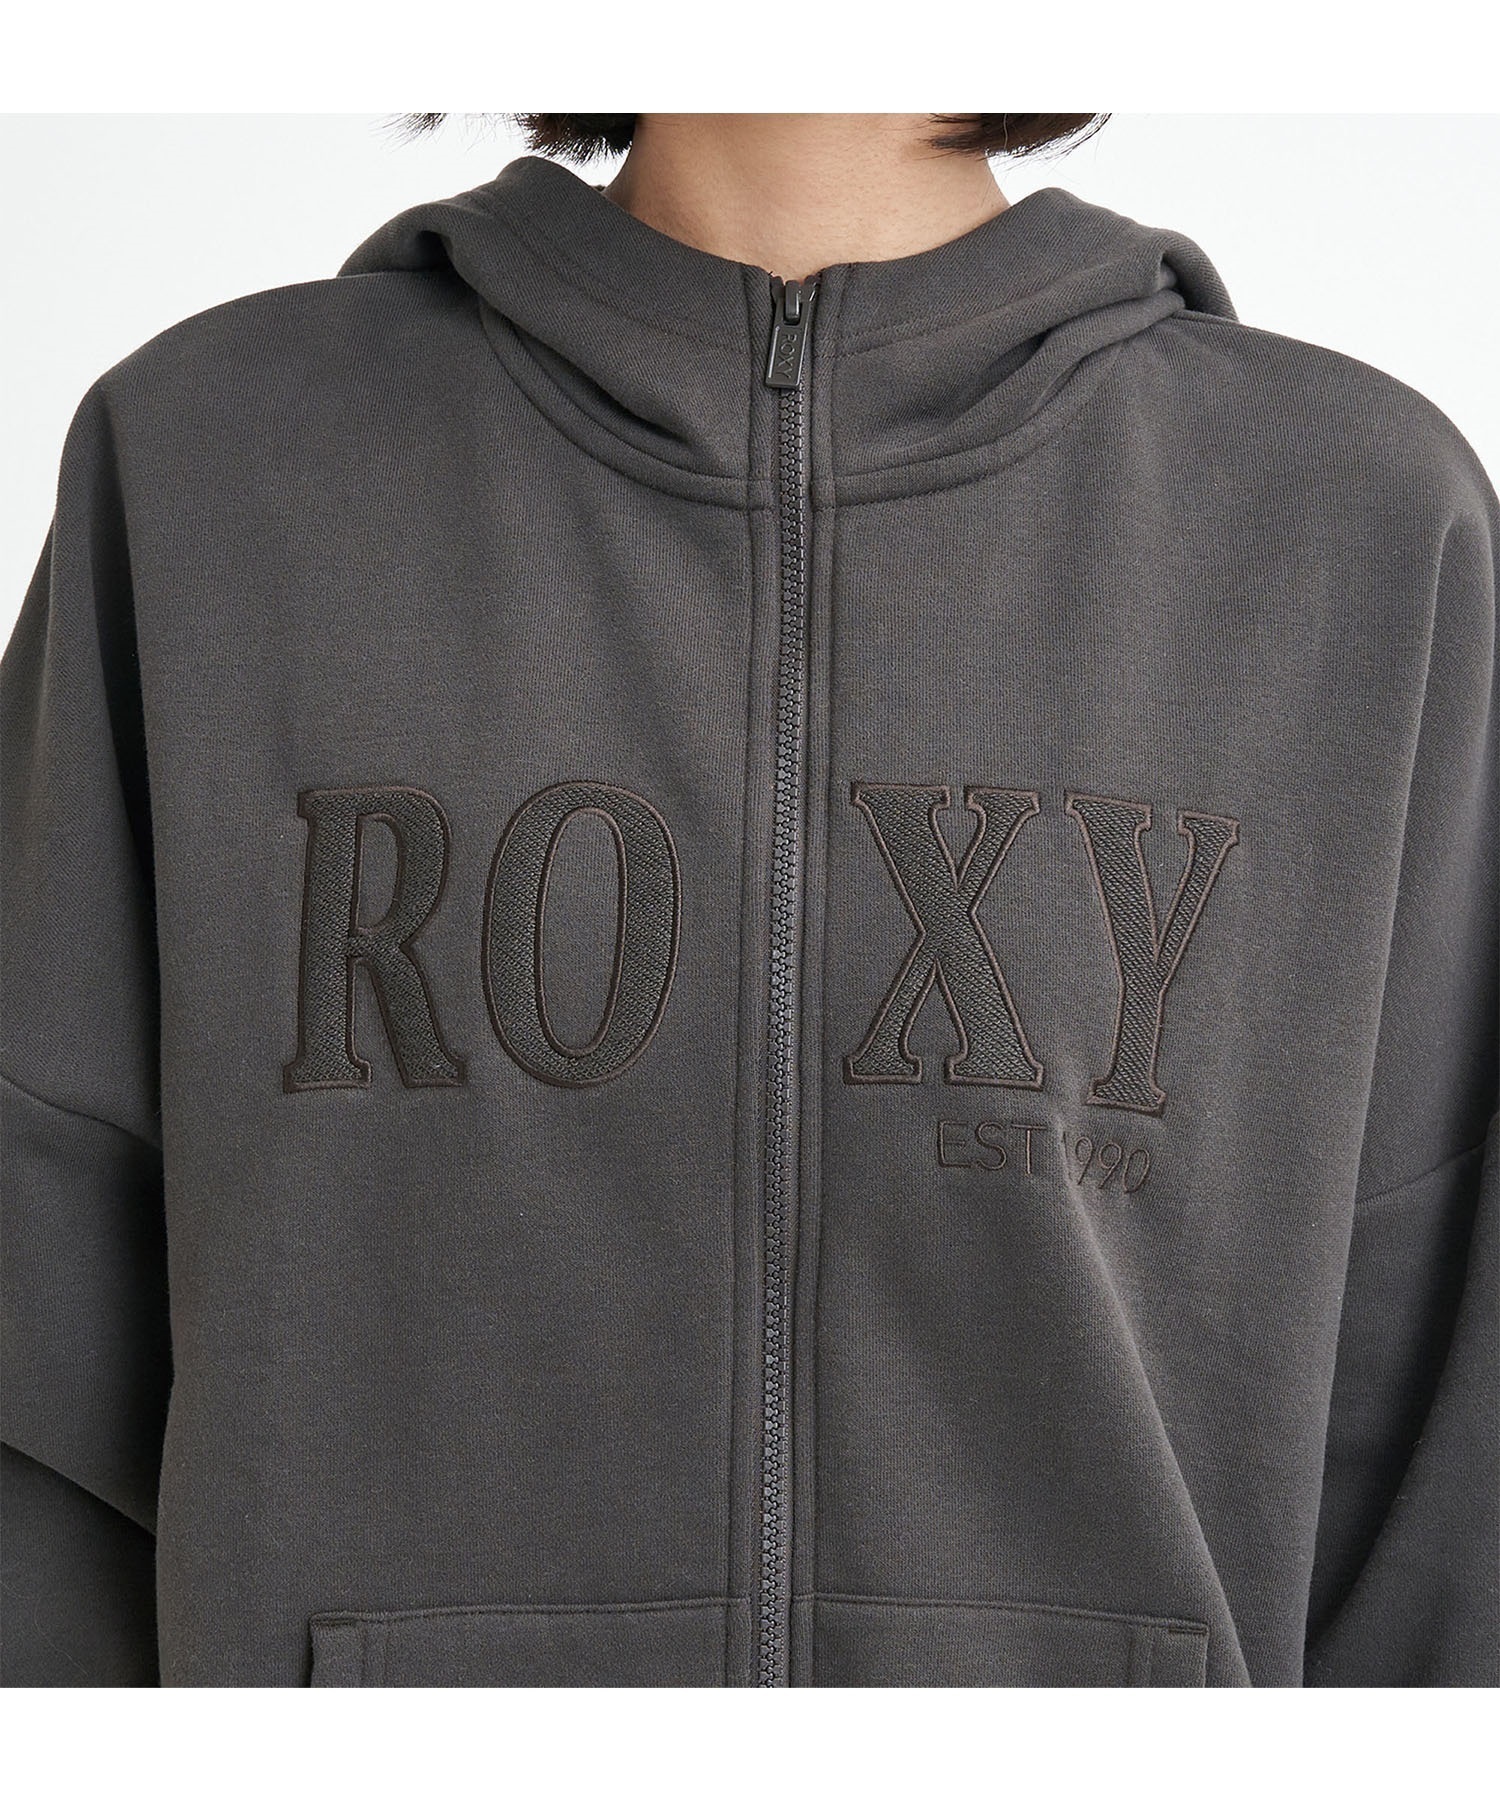 ROXY/ロキシー ジビー ジップアップパーカーレディース  裏起毛 RZP234022(BBK-S)